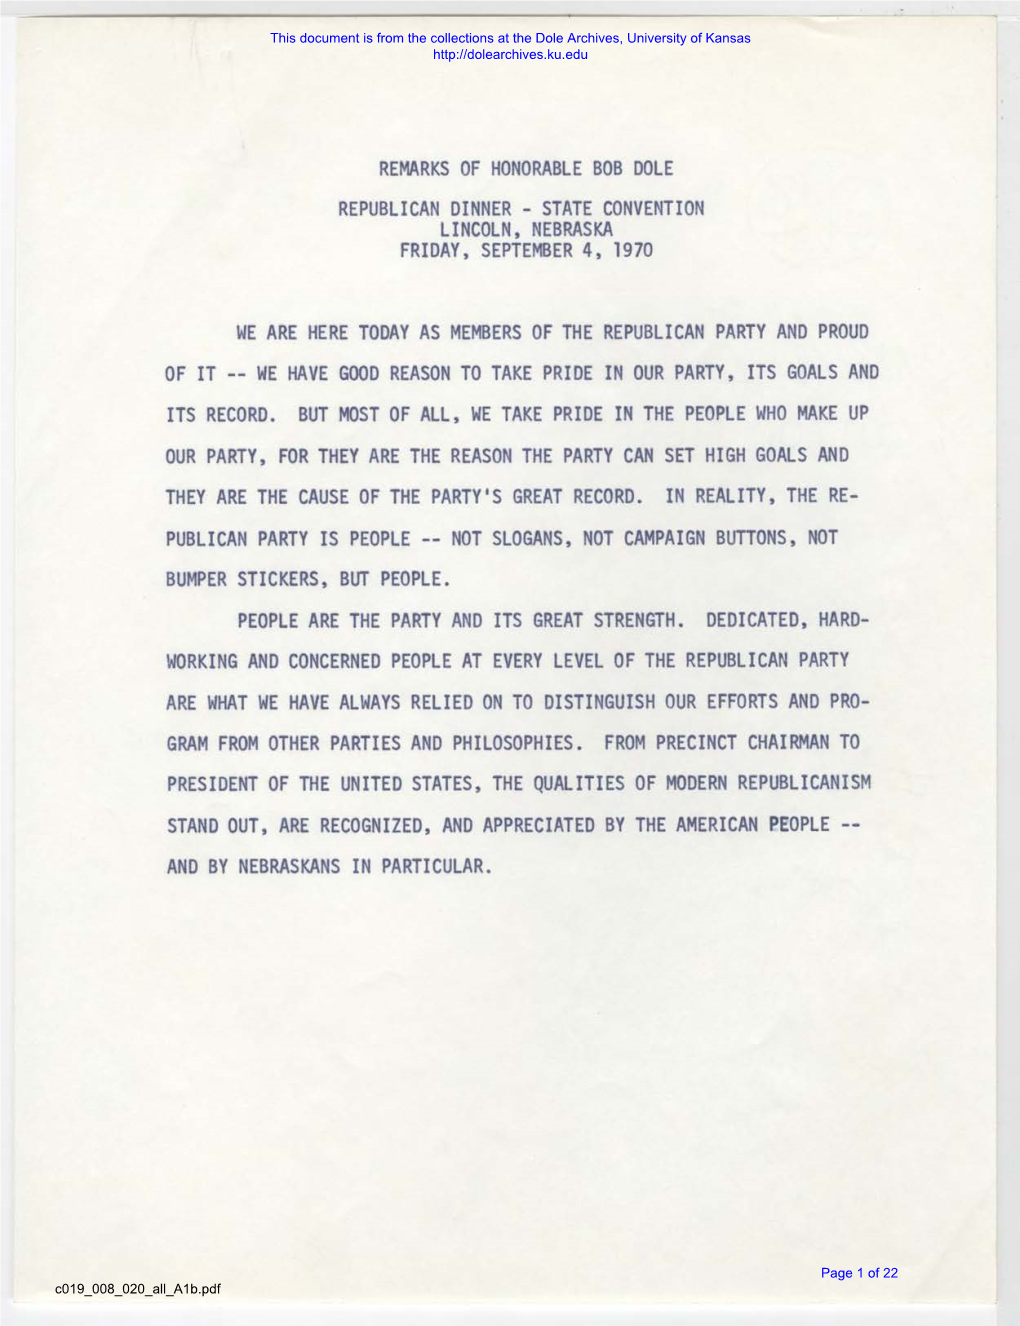 Remarks of Honorable Bob Dole Republican Dinner - State Convention Lincoln, Nebraska Friday, September 4, 1970